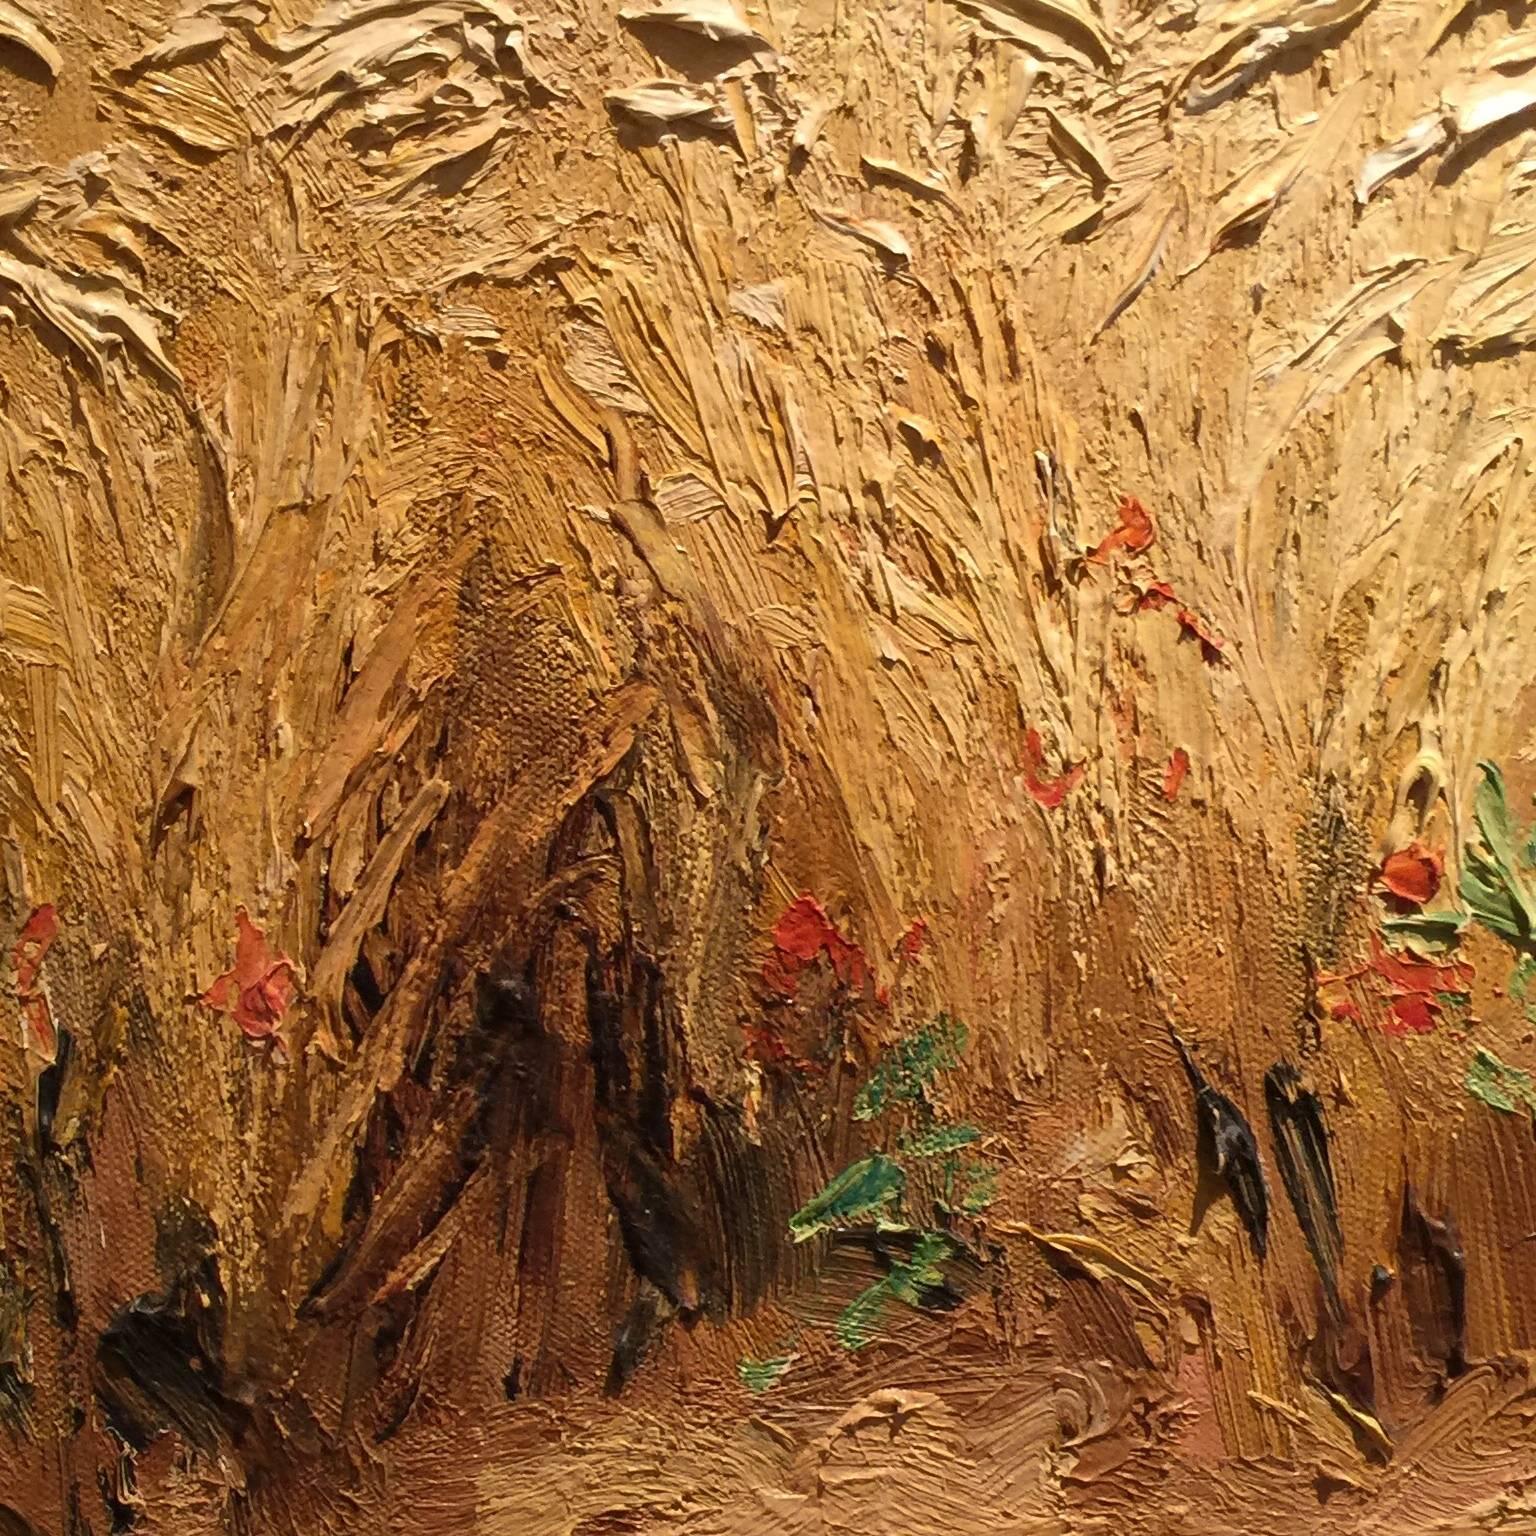 Wheat Fields - Brown Landscape Painting by Marcel Dyf